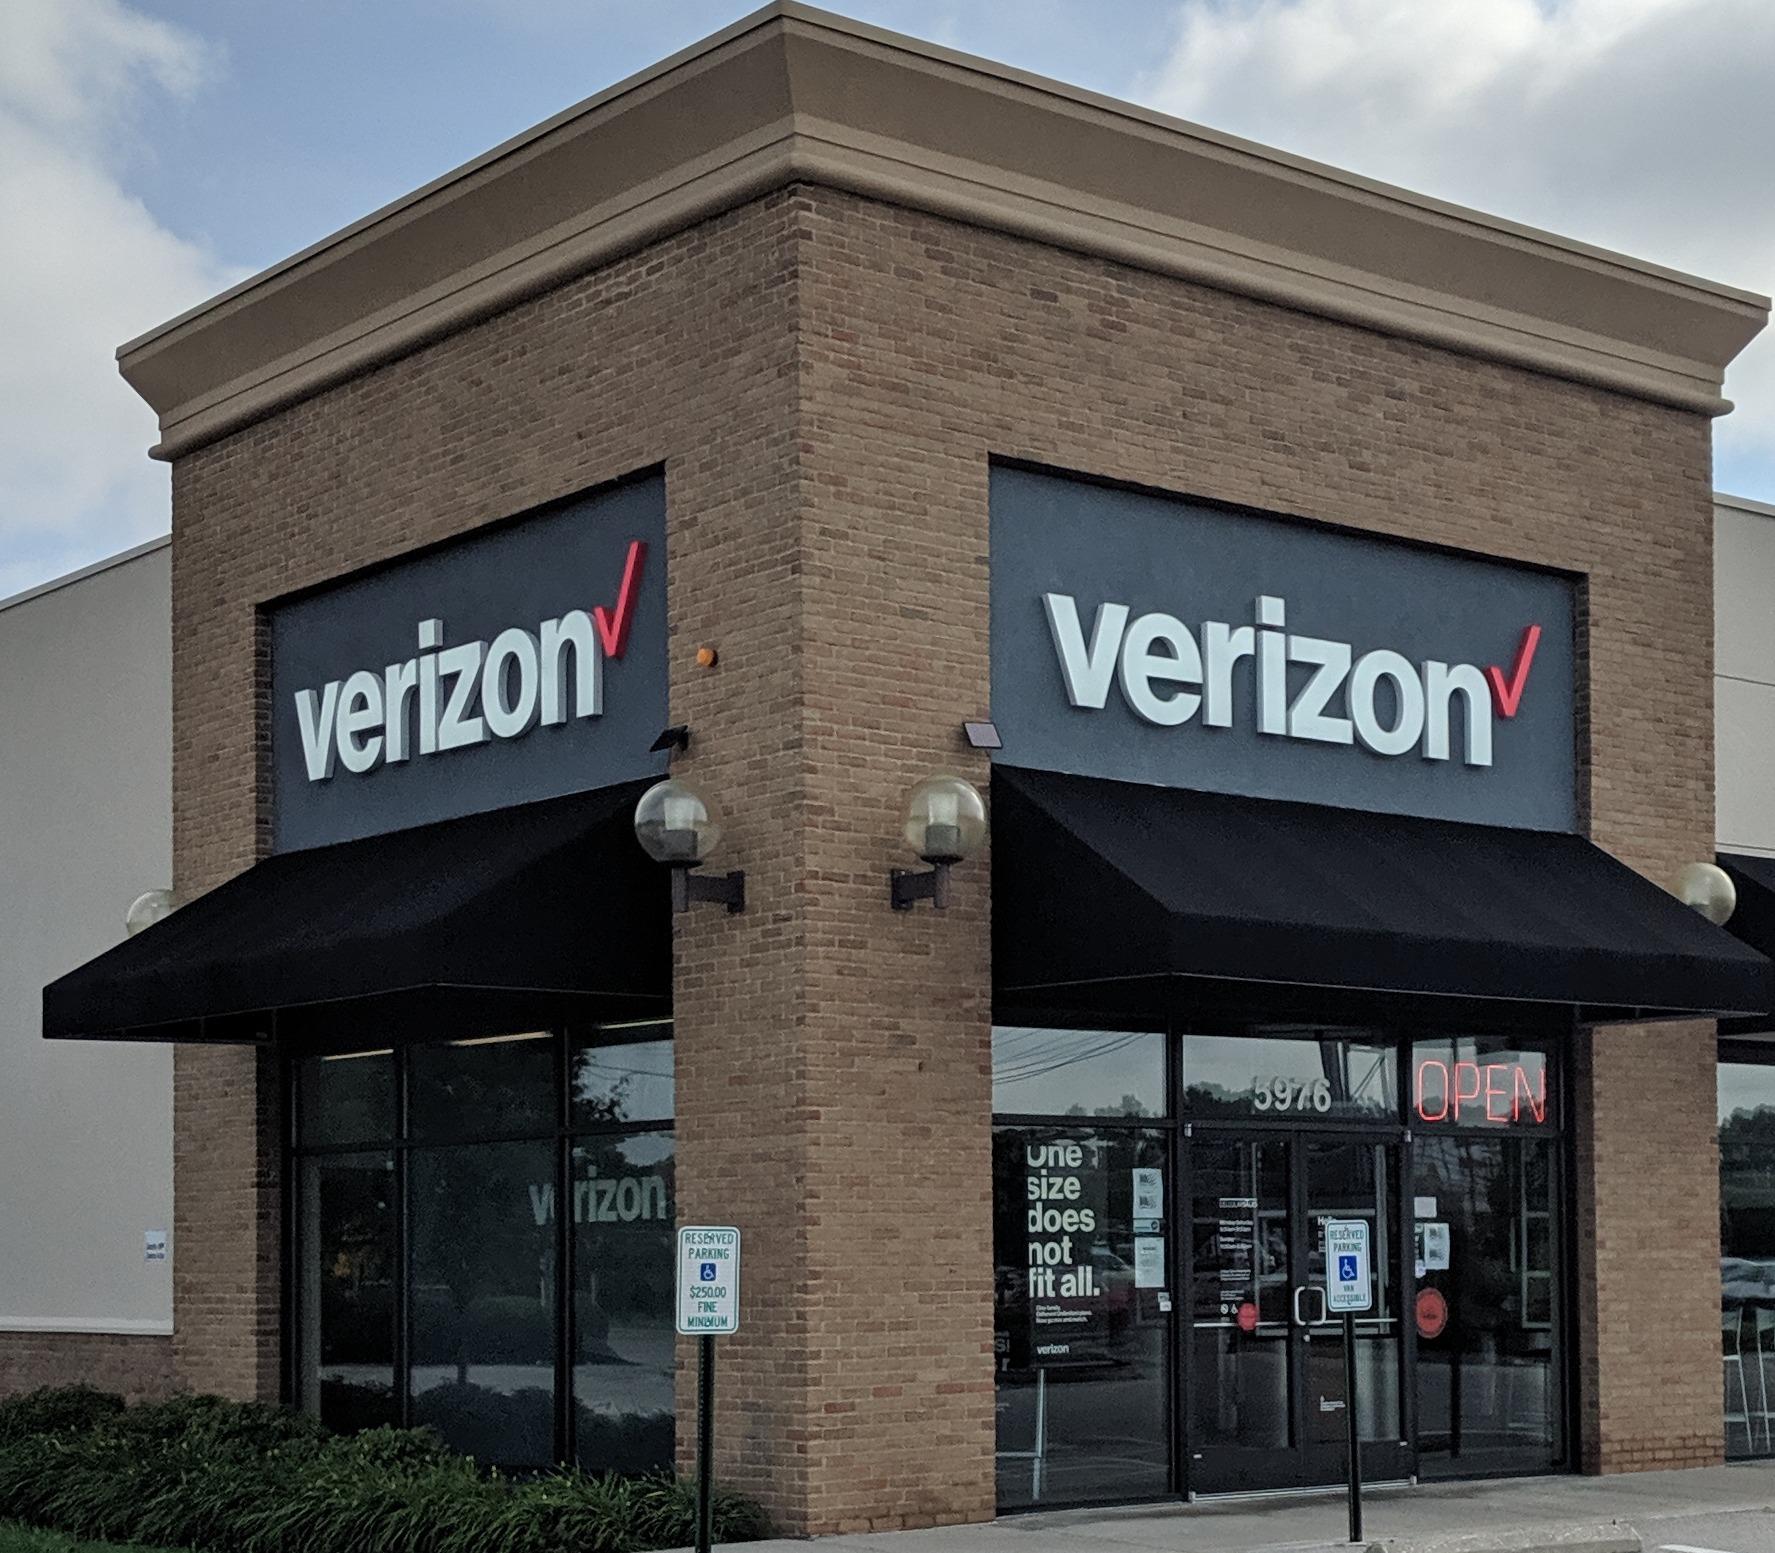 Verizon Authorized Retailer – Cellular Sales Photo